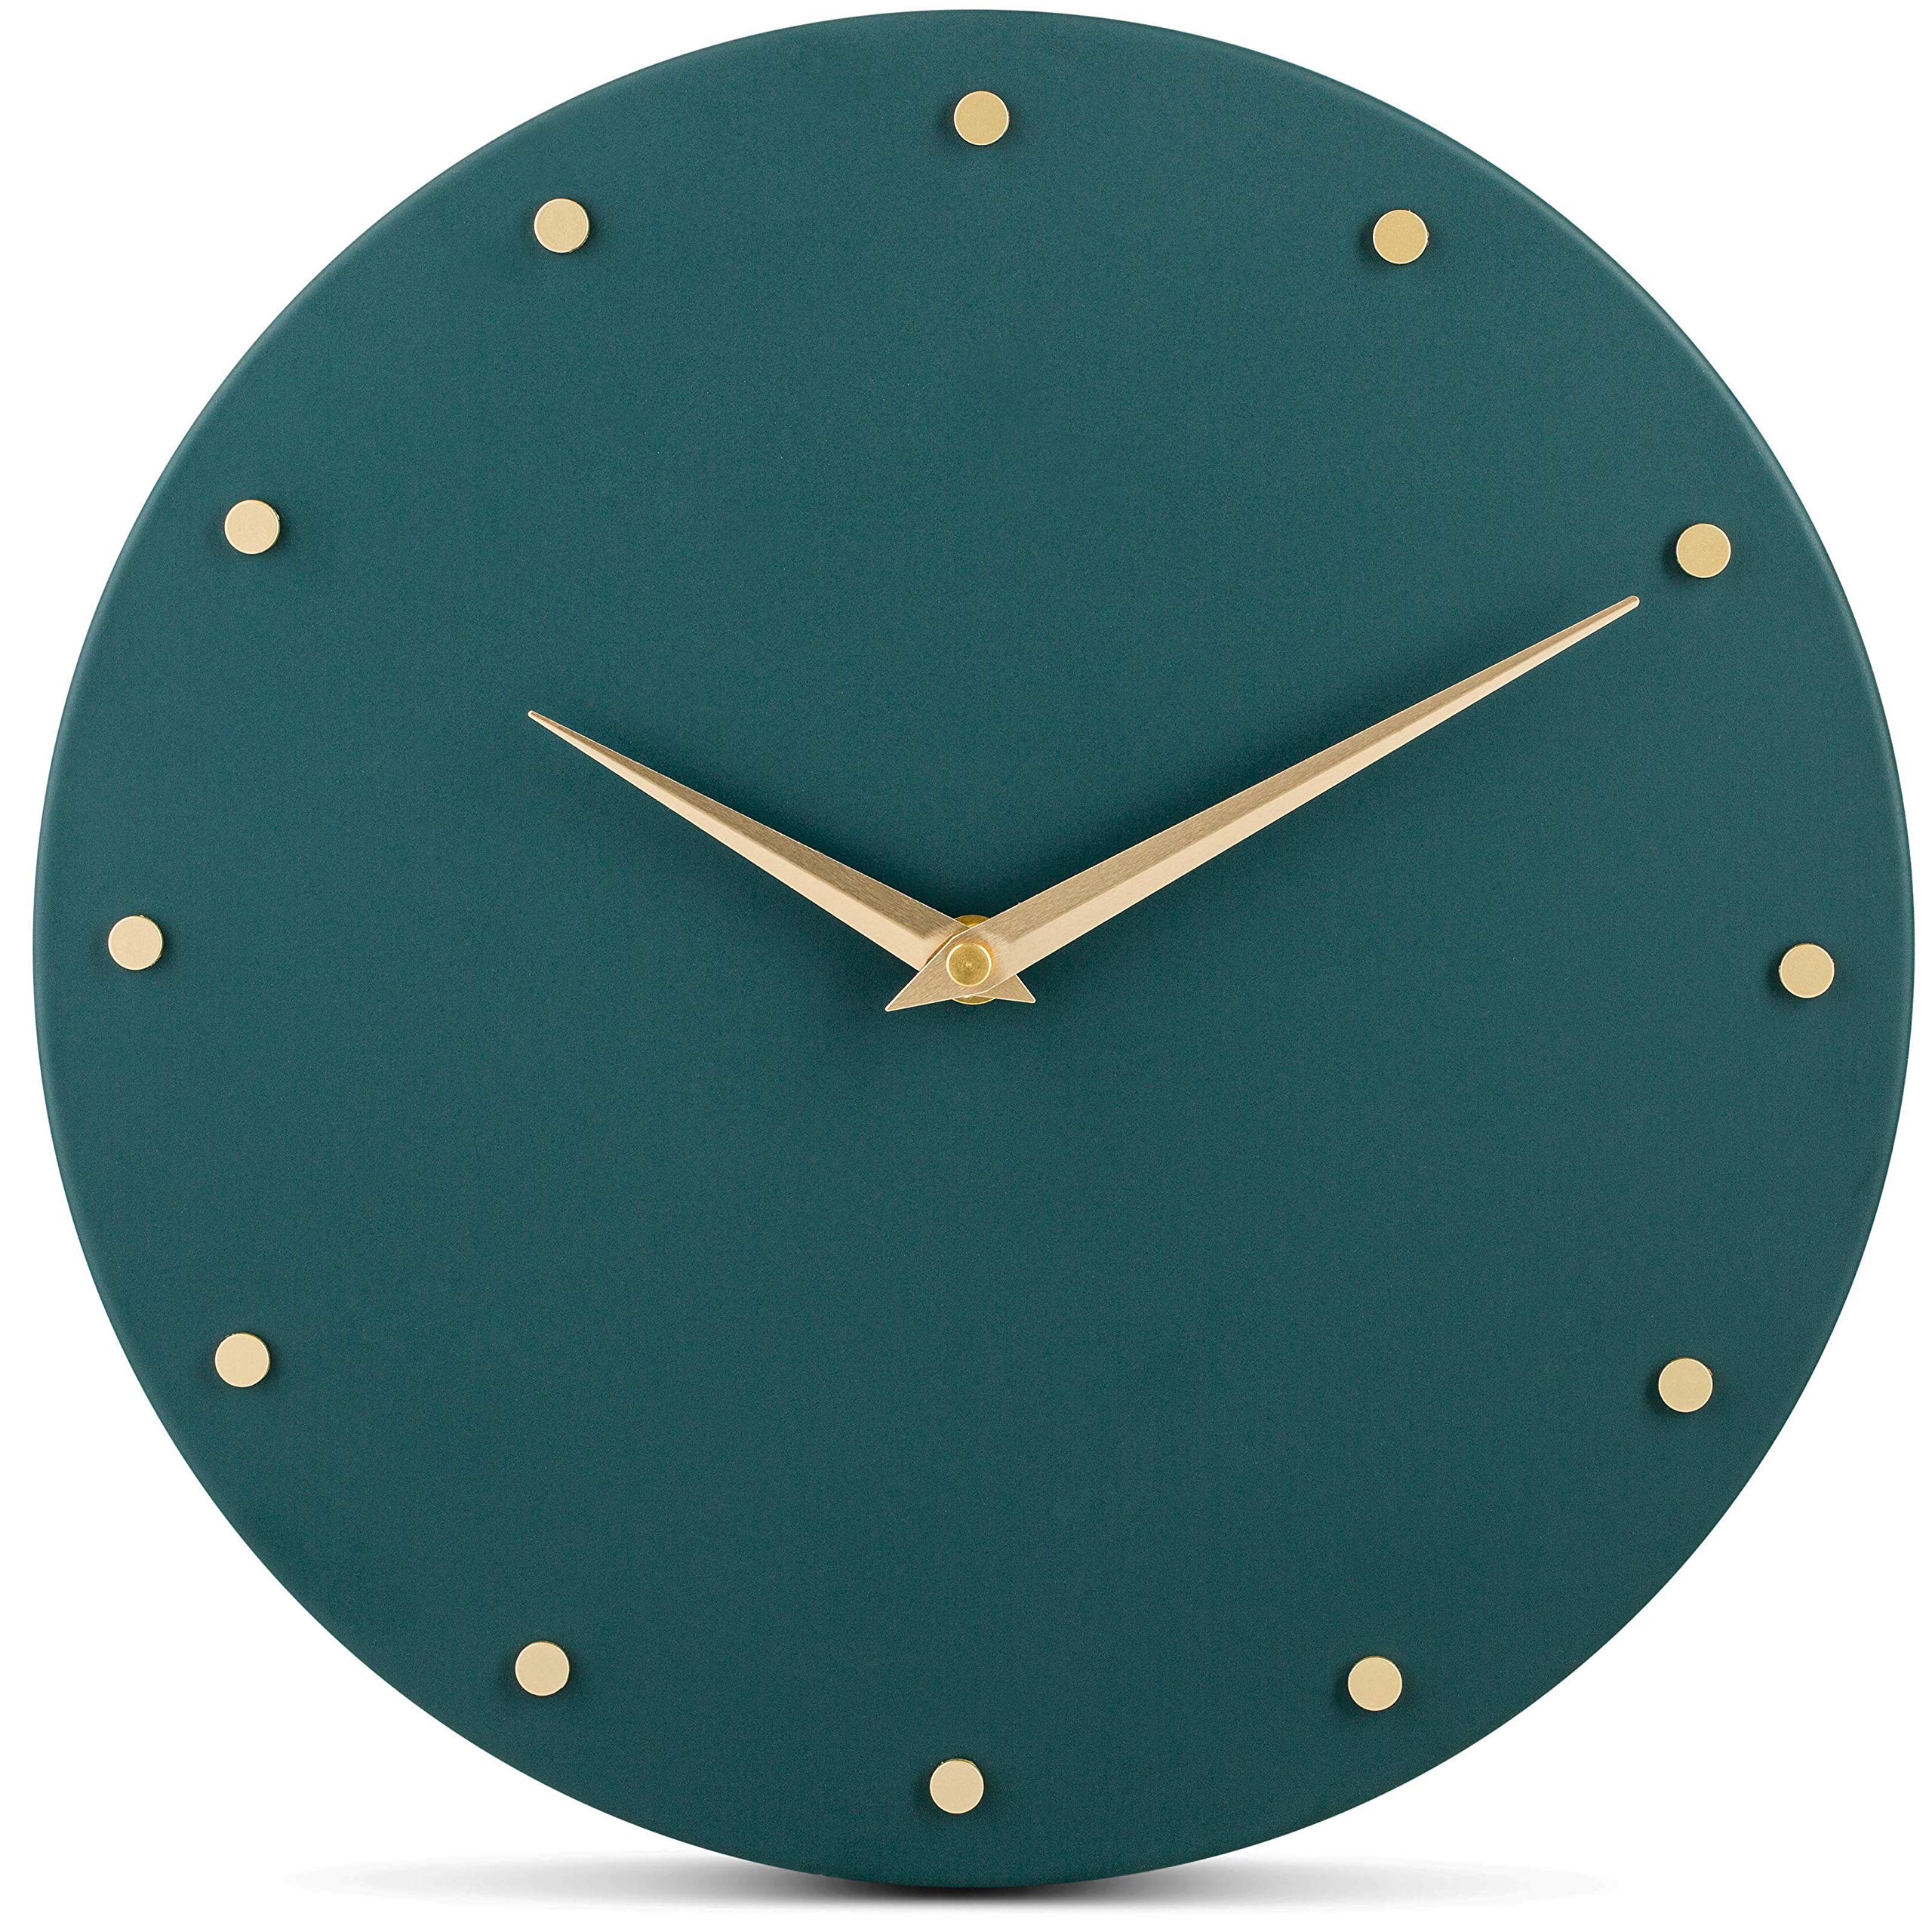 Bernhard Products Decorative Modern Wall Clock